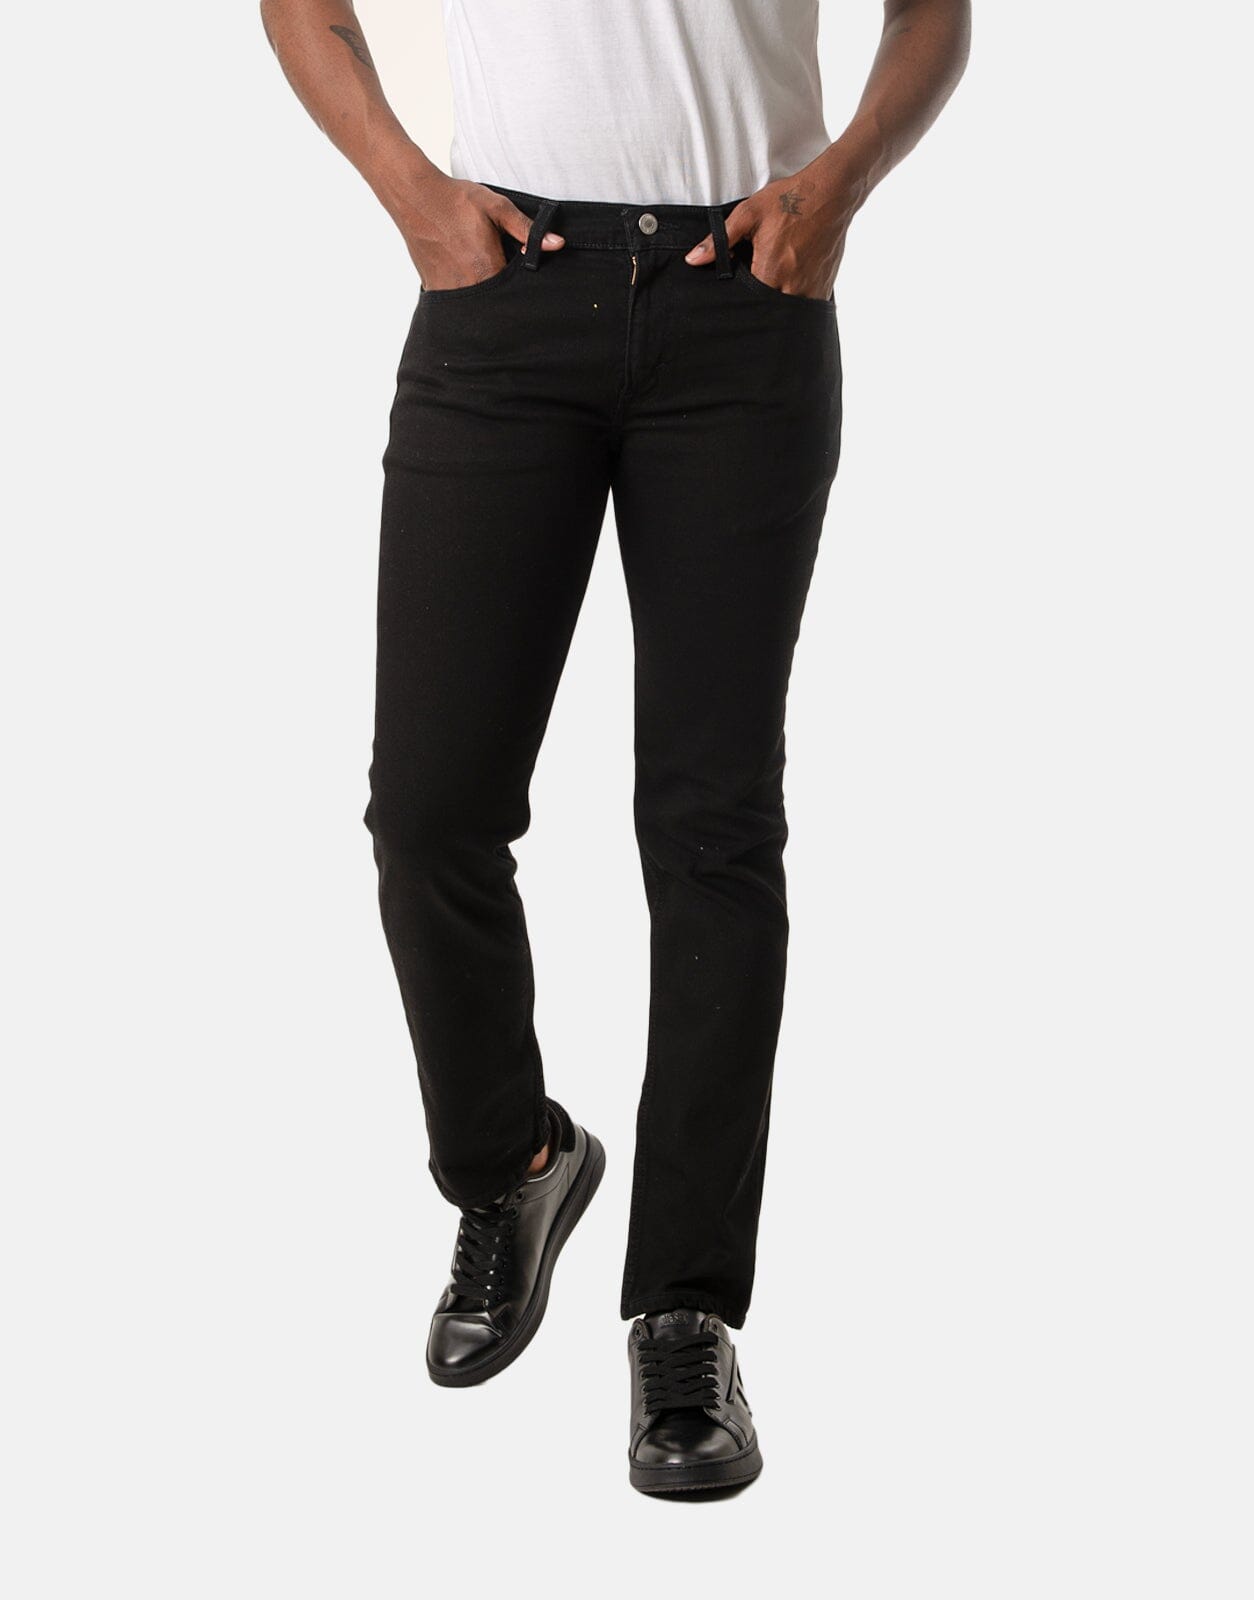 Levi's 511 Slim Native Cali Jeans - Subwear